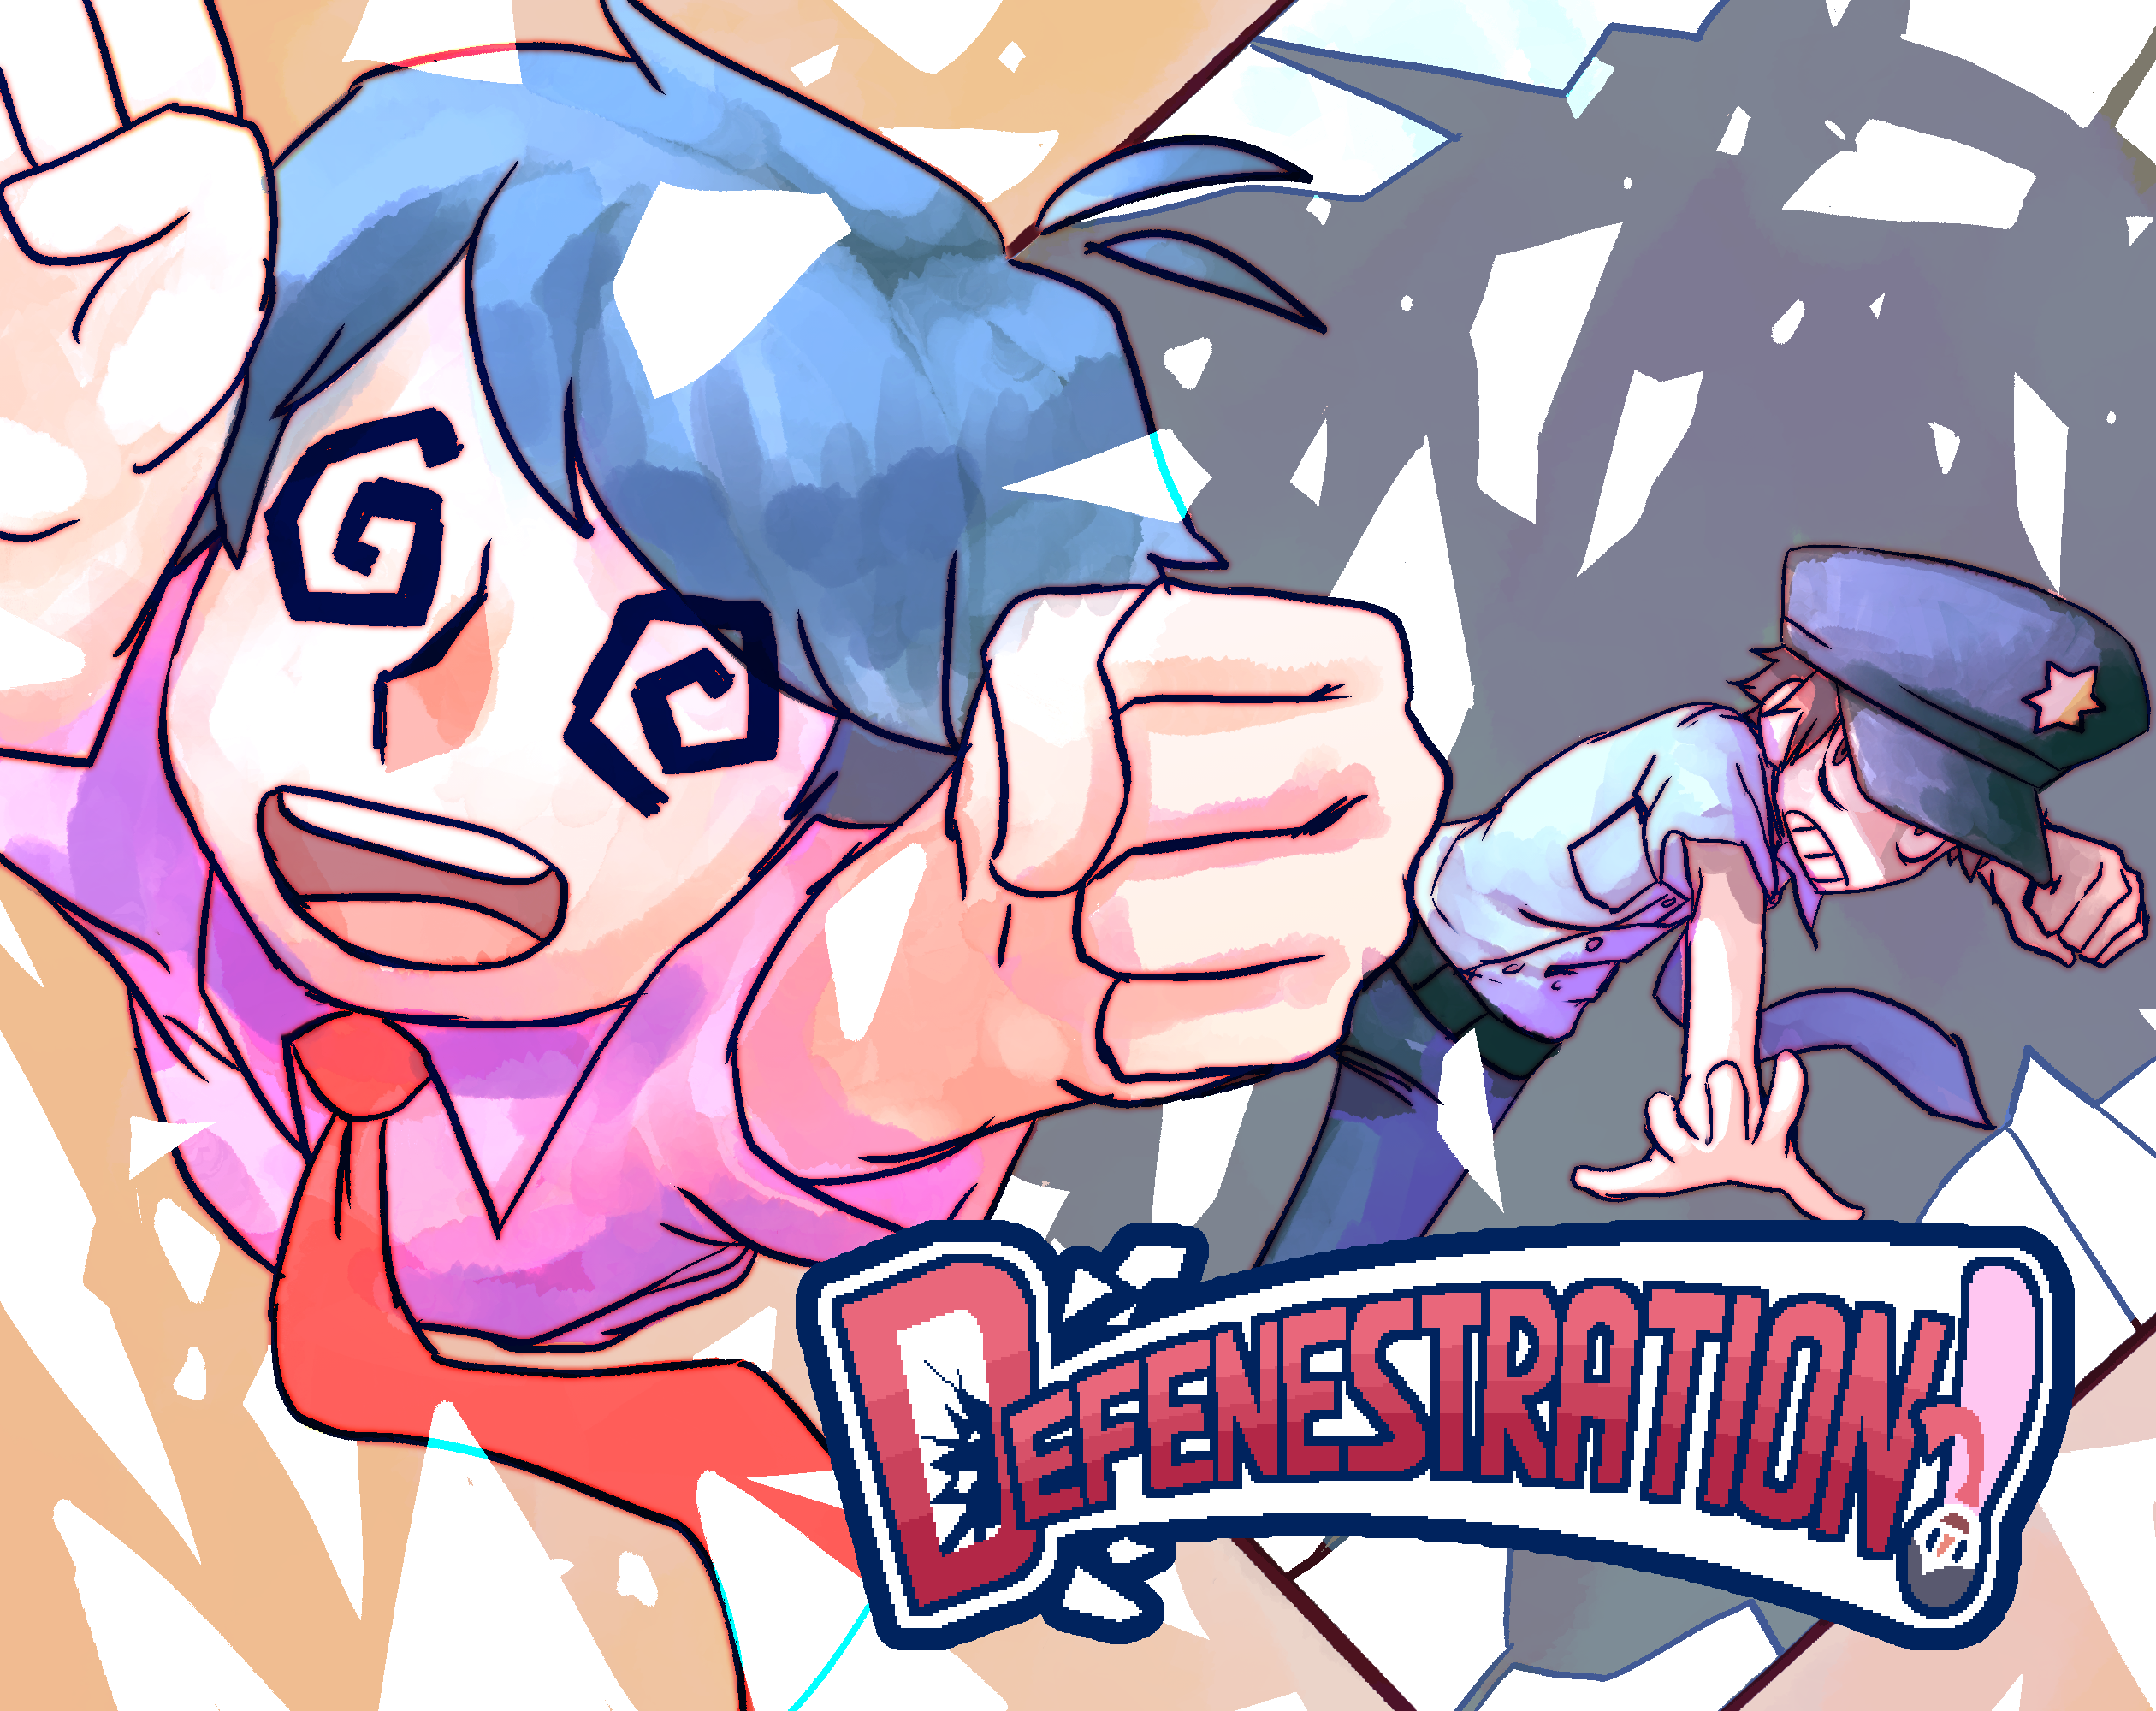 Defenestration!